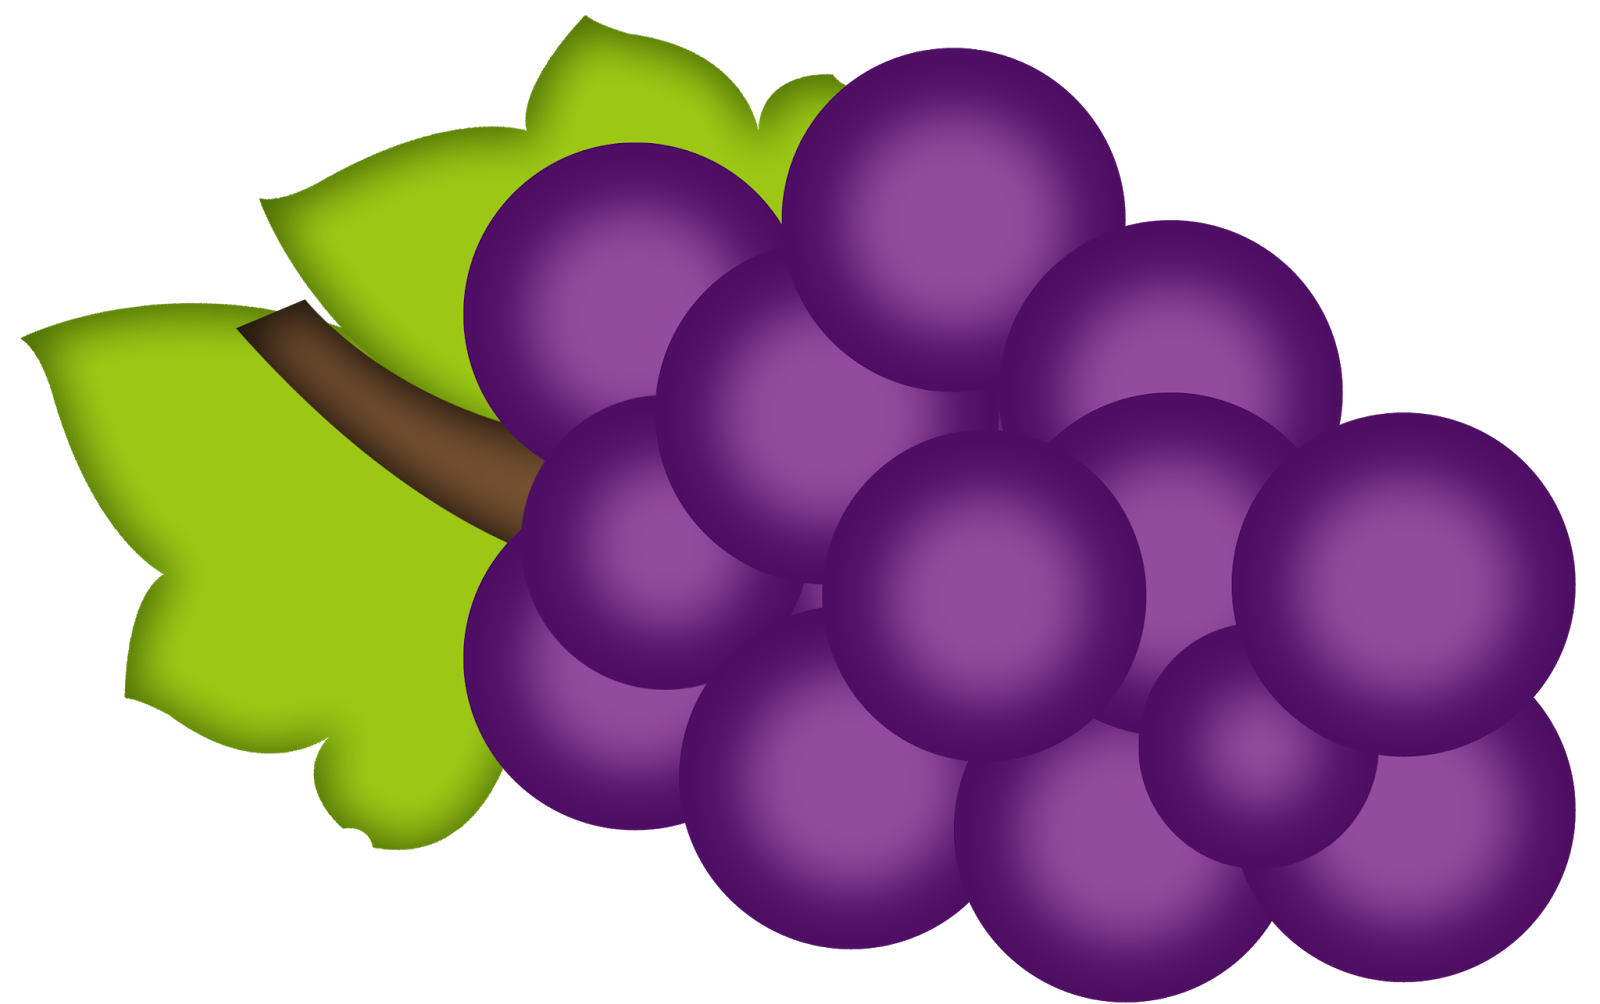 grapevine clipart template